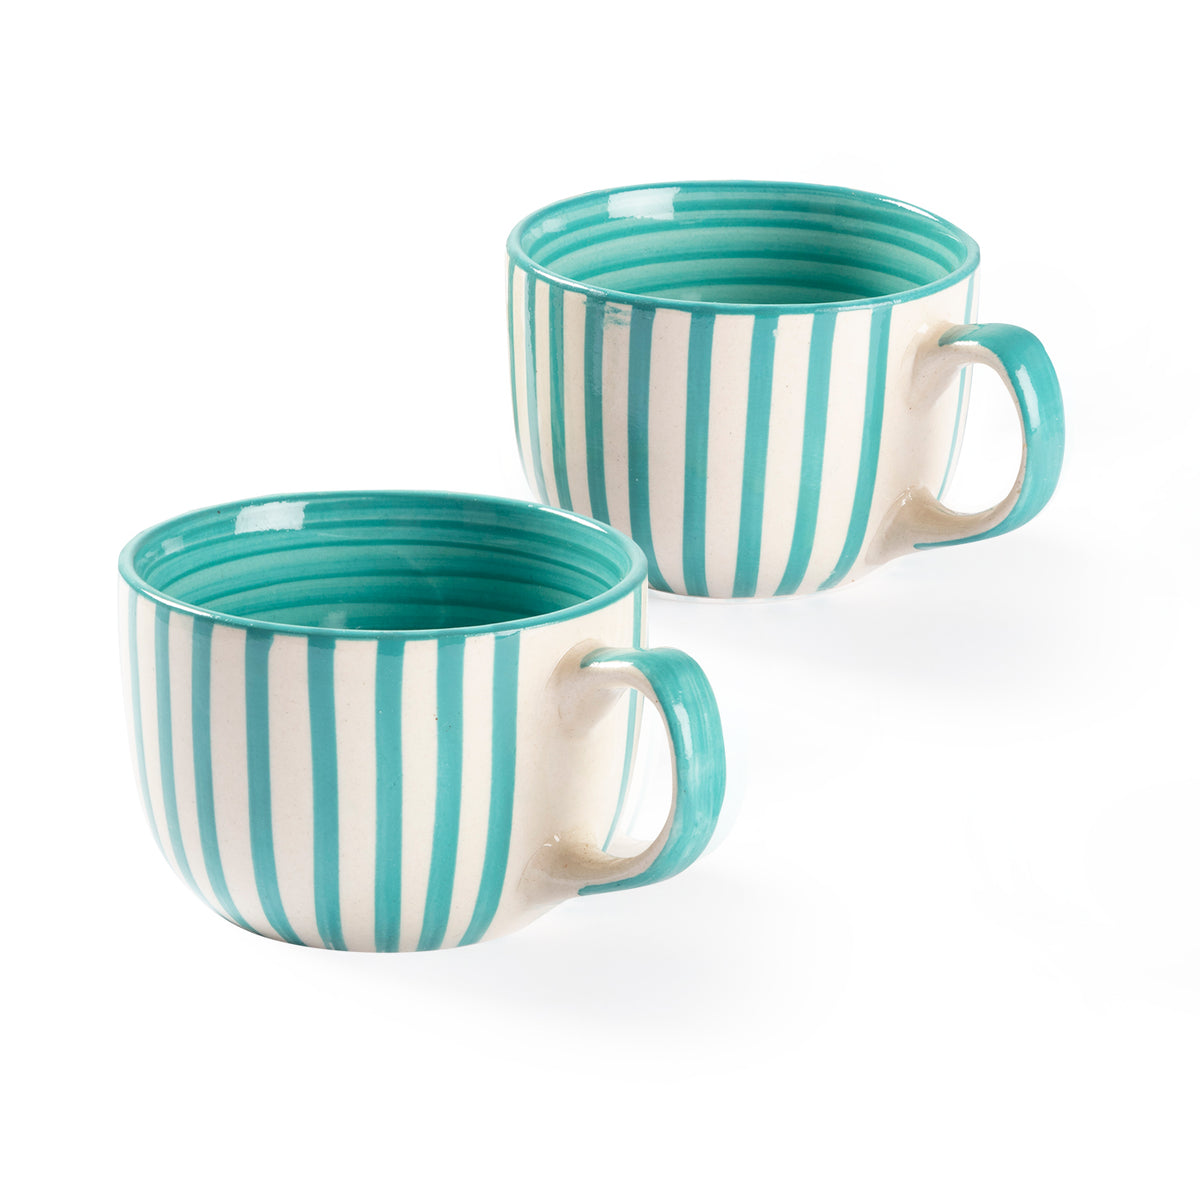 Handpainted Ceramic Mugs - 2.75 x 4 Set of 2